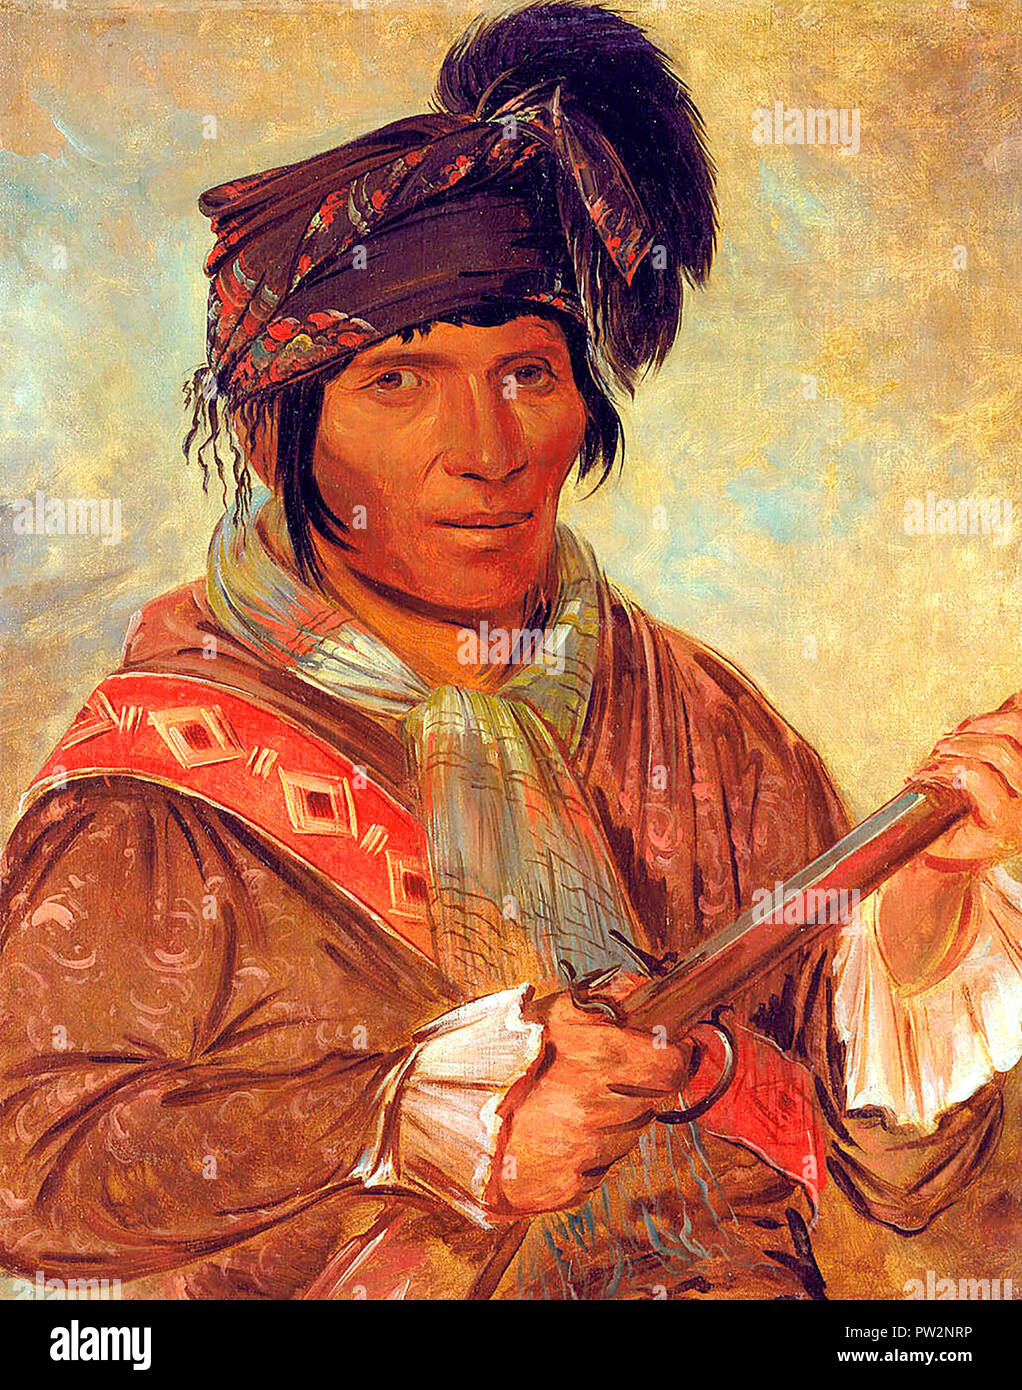 Co-ee-há-jo, un capo Seminole, George Catlin, 1837 Foto Stock